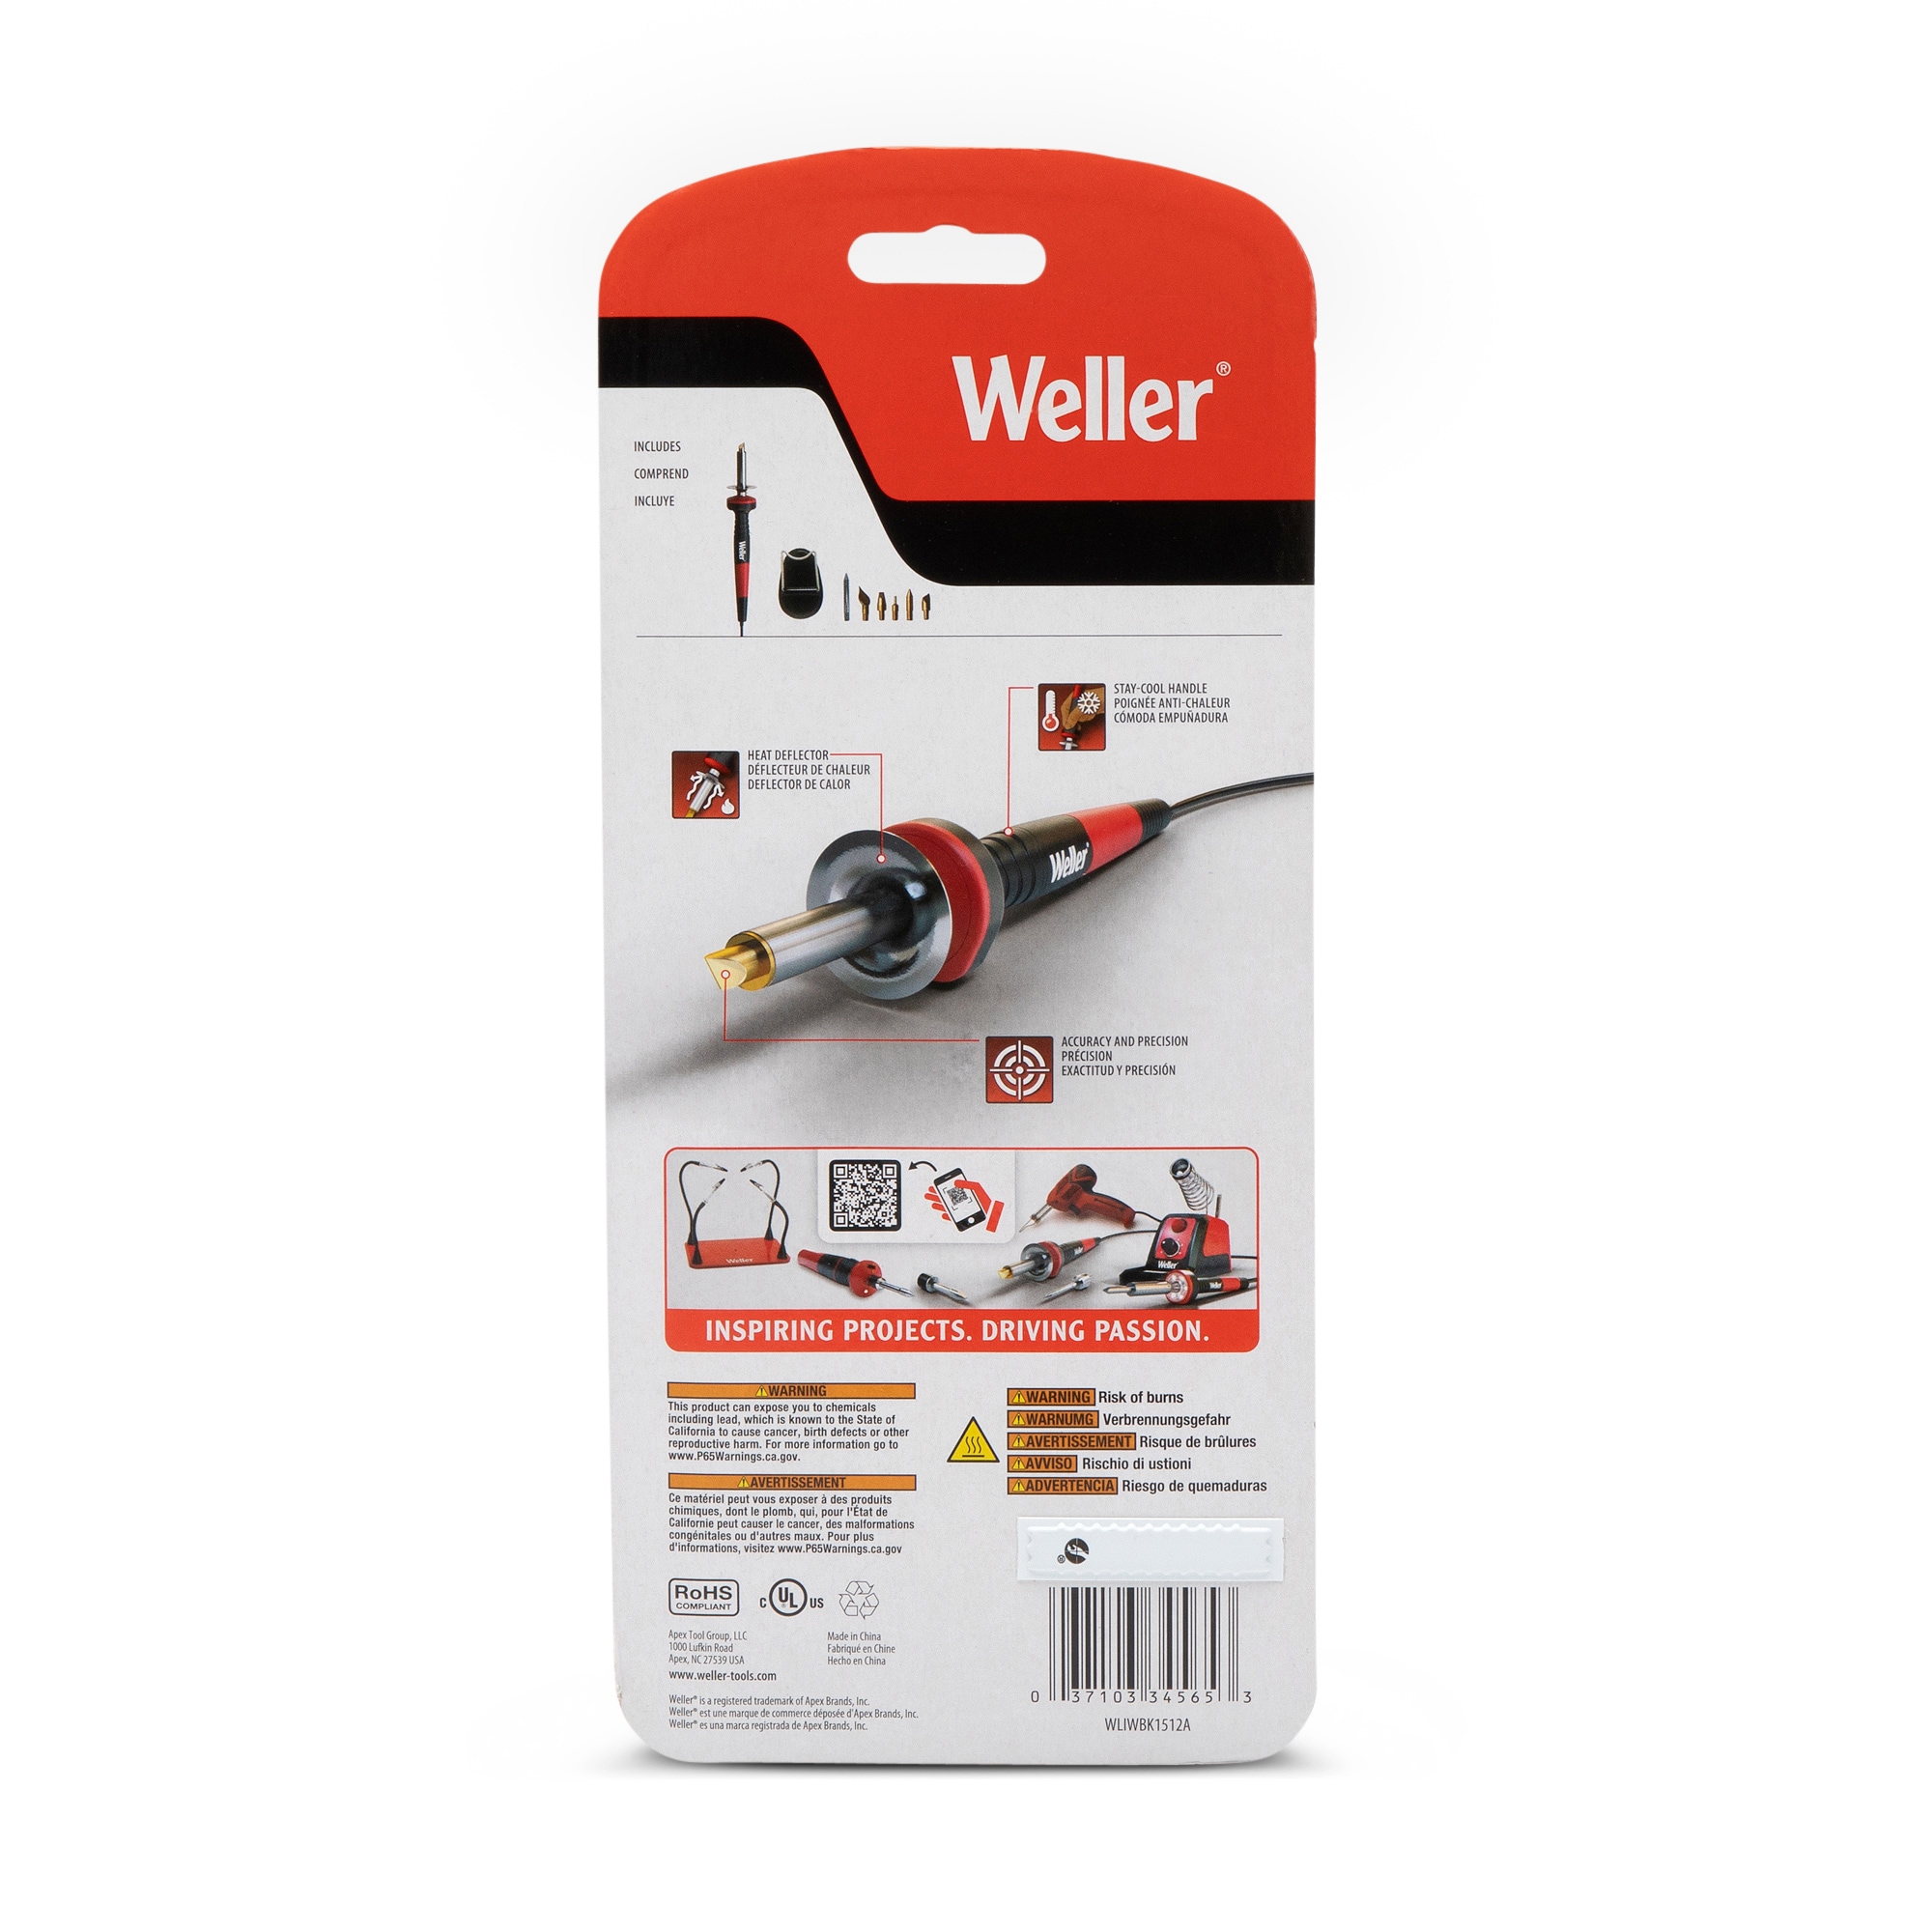 Weller 25 Watt Wood Burning Tool in the Soldering Irons & Kits department  at